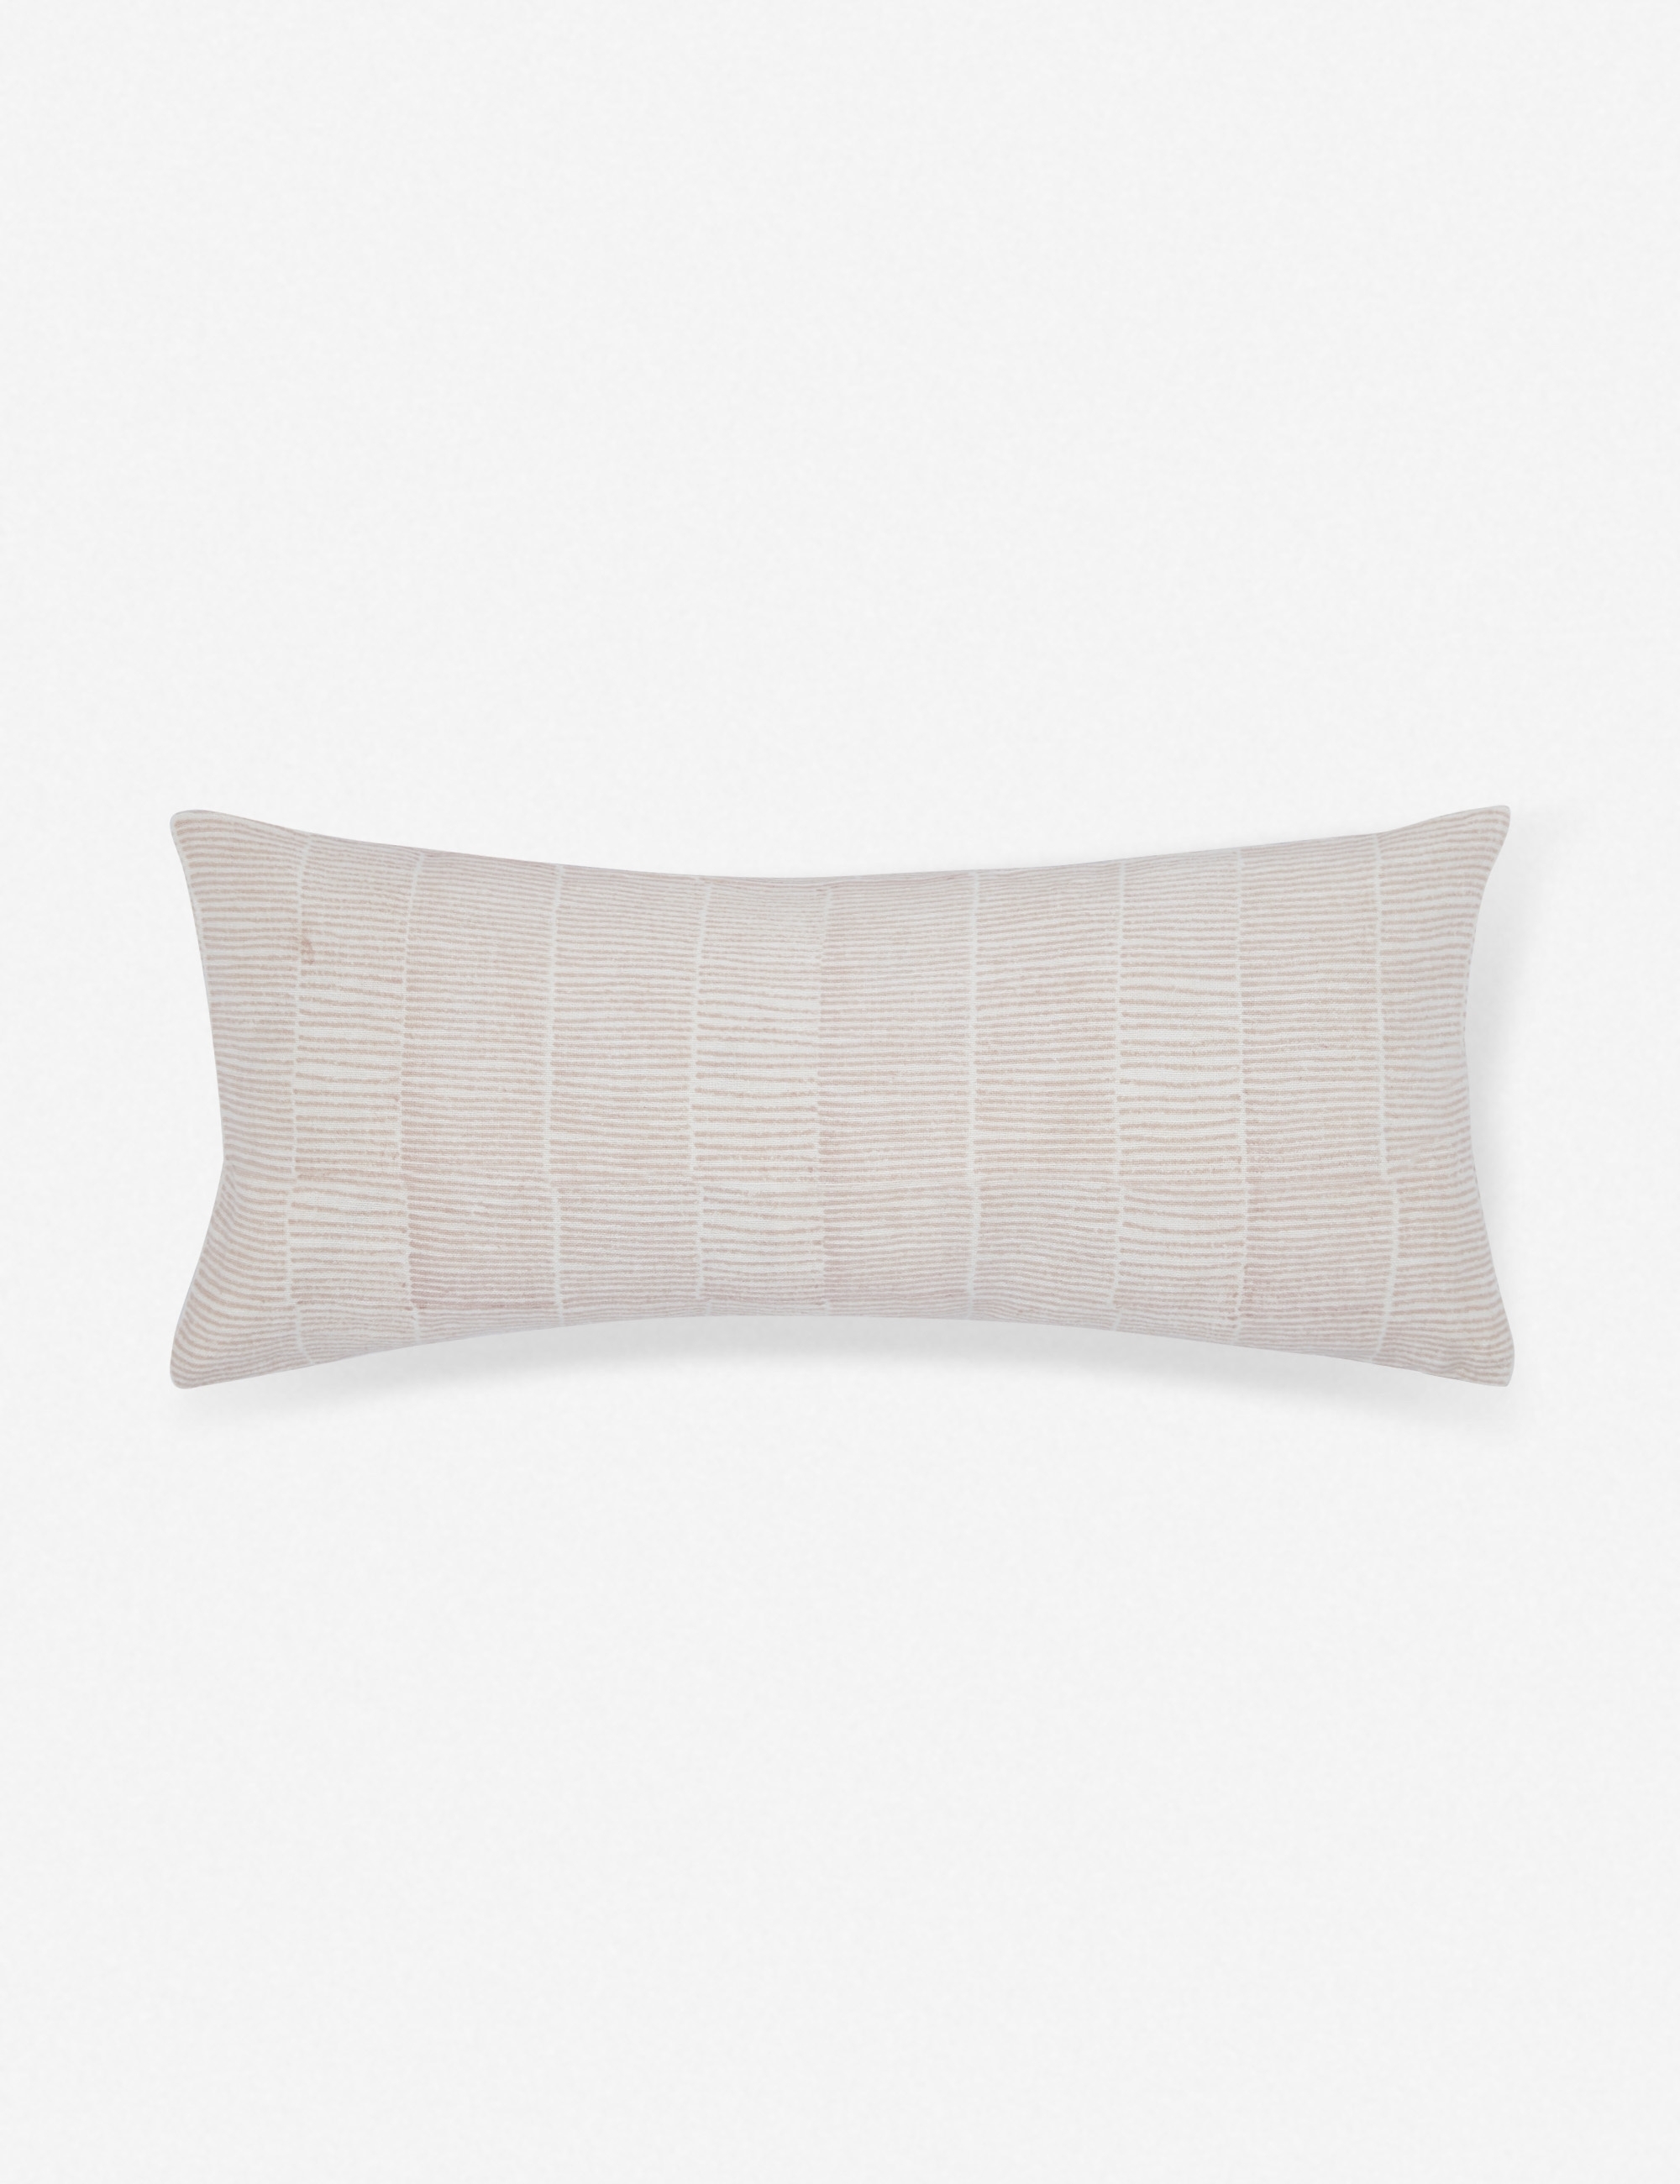 Claudette Long Lumbar Pillow, Blush - Image 0